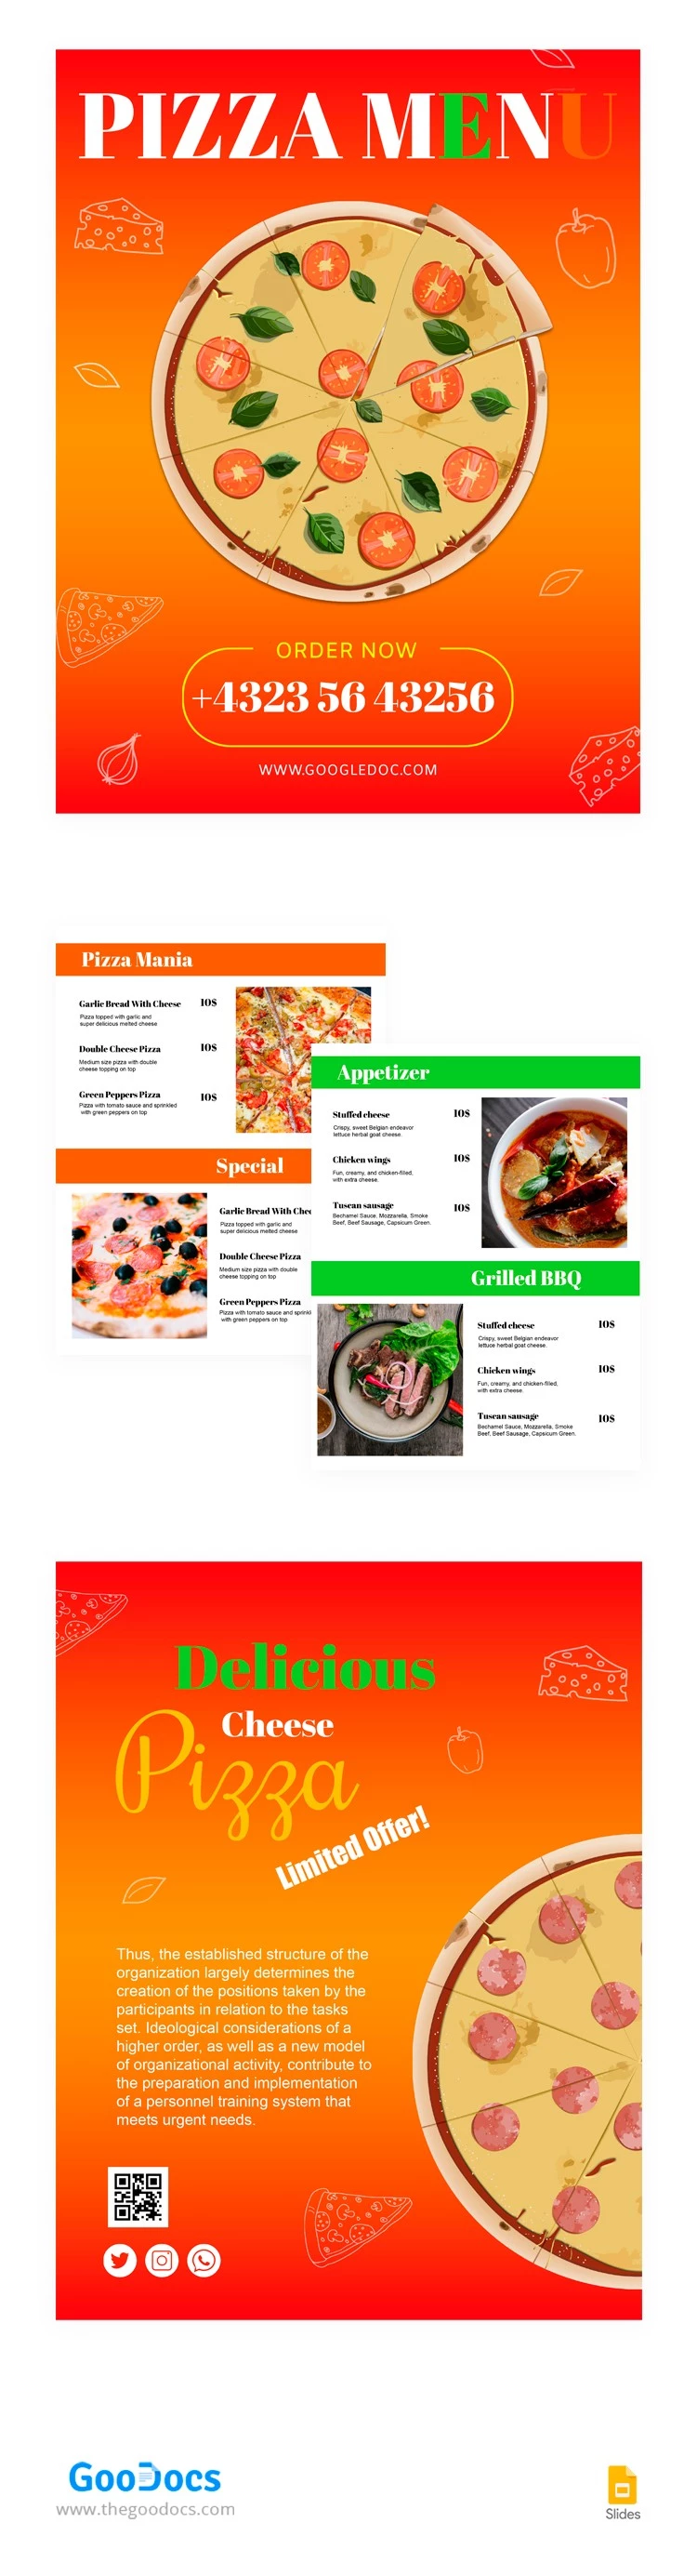 Menú de restaurante italiano de pizza - free Google Docs Template - 10063587